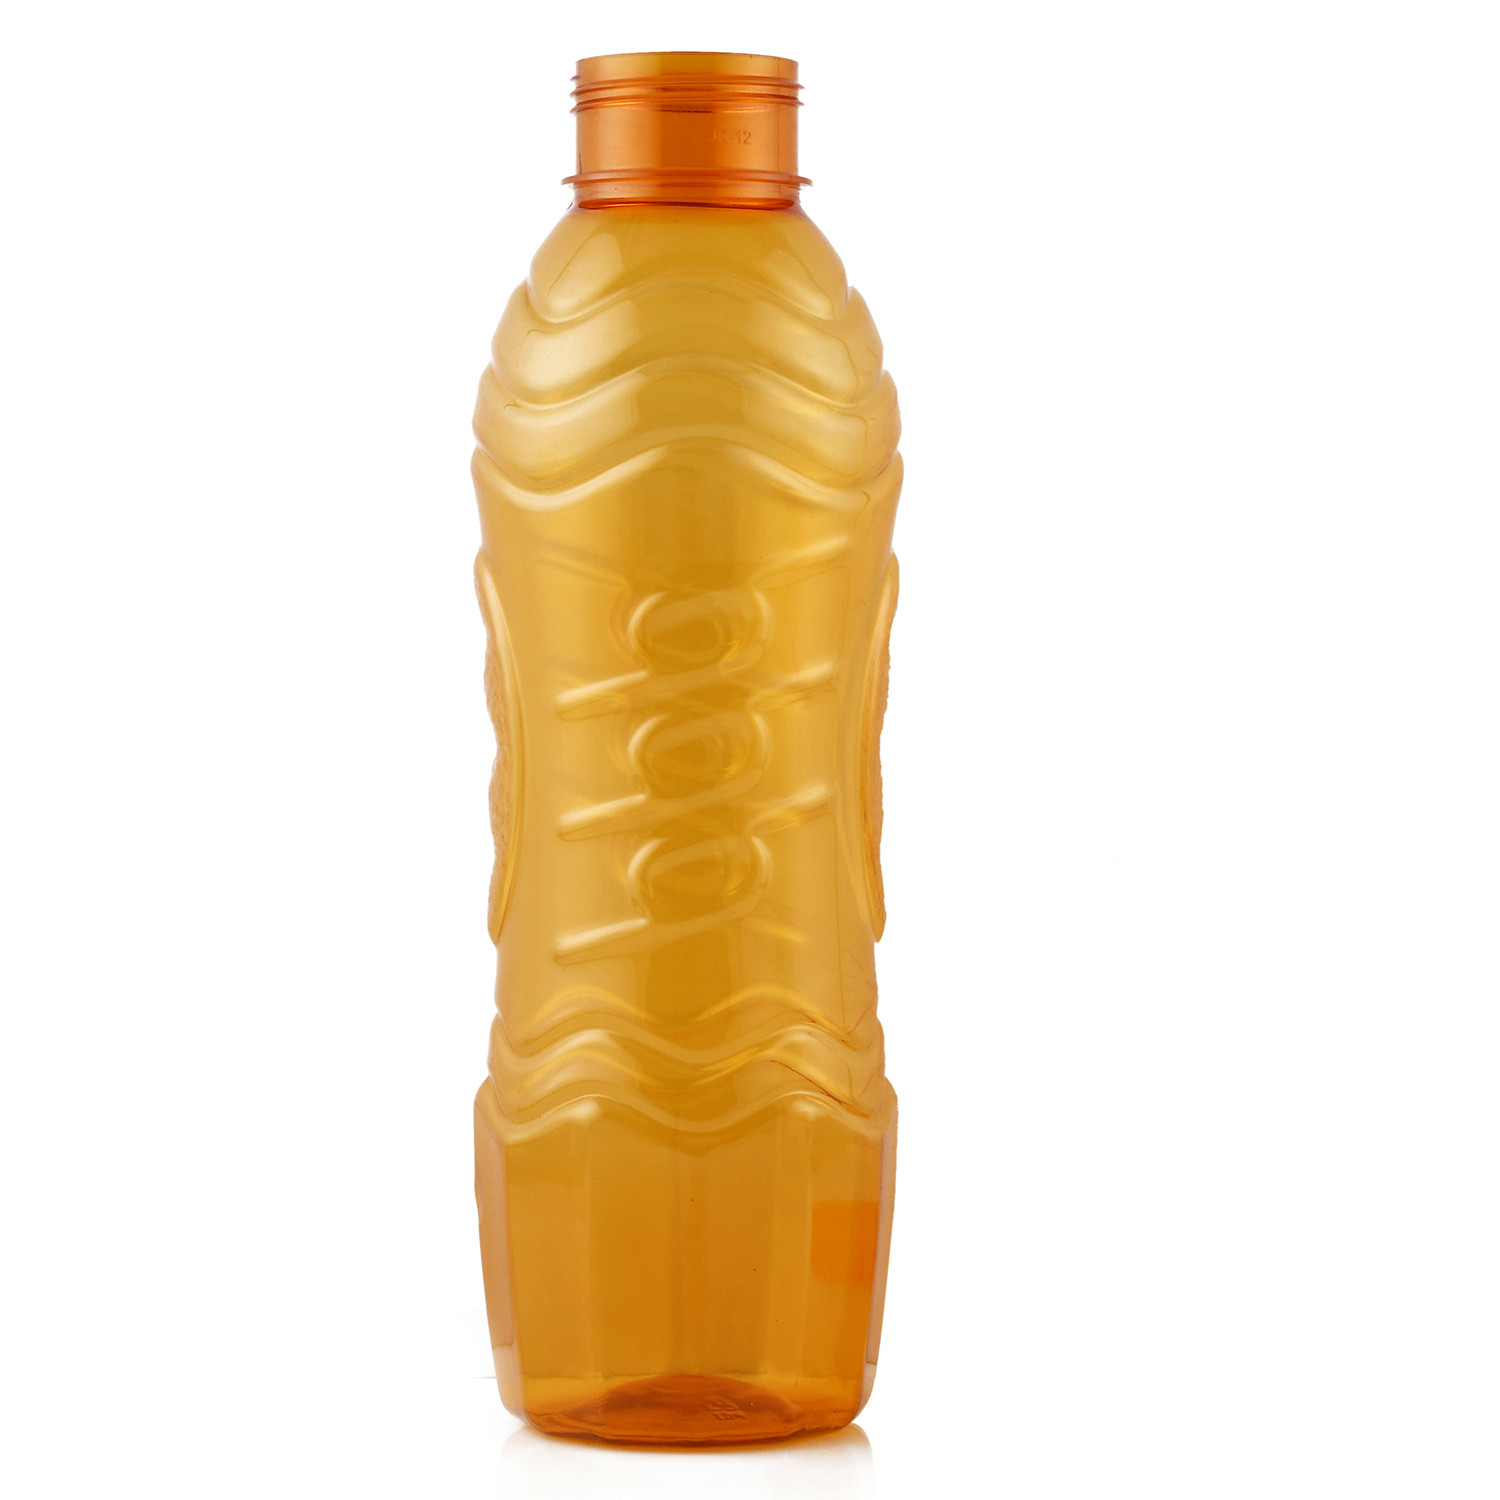 Kuber Industries Plastic Fridge Water Bottle Set with Flip Cap (1000ml, Blue & Green & Orange)-KUBMART1522